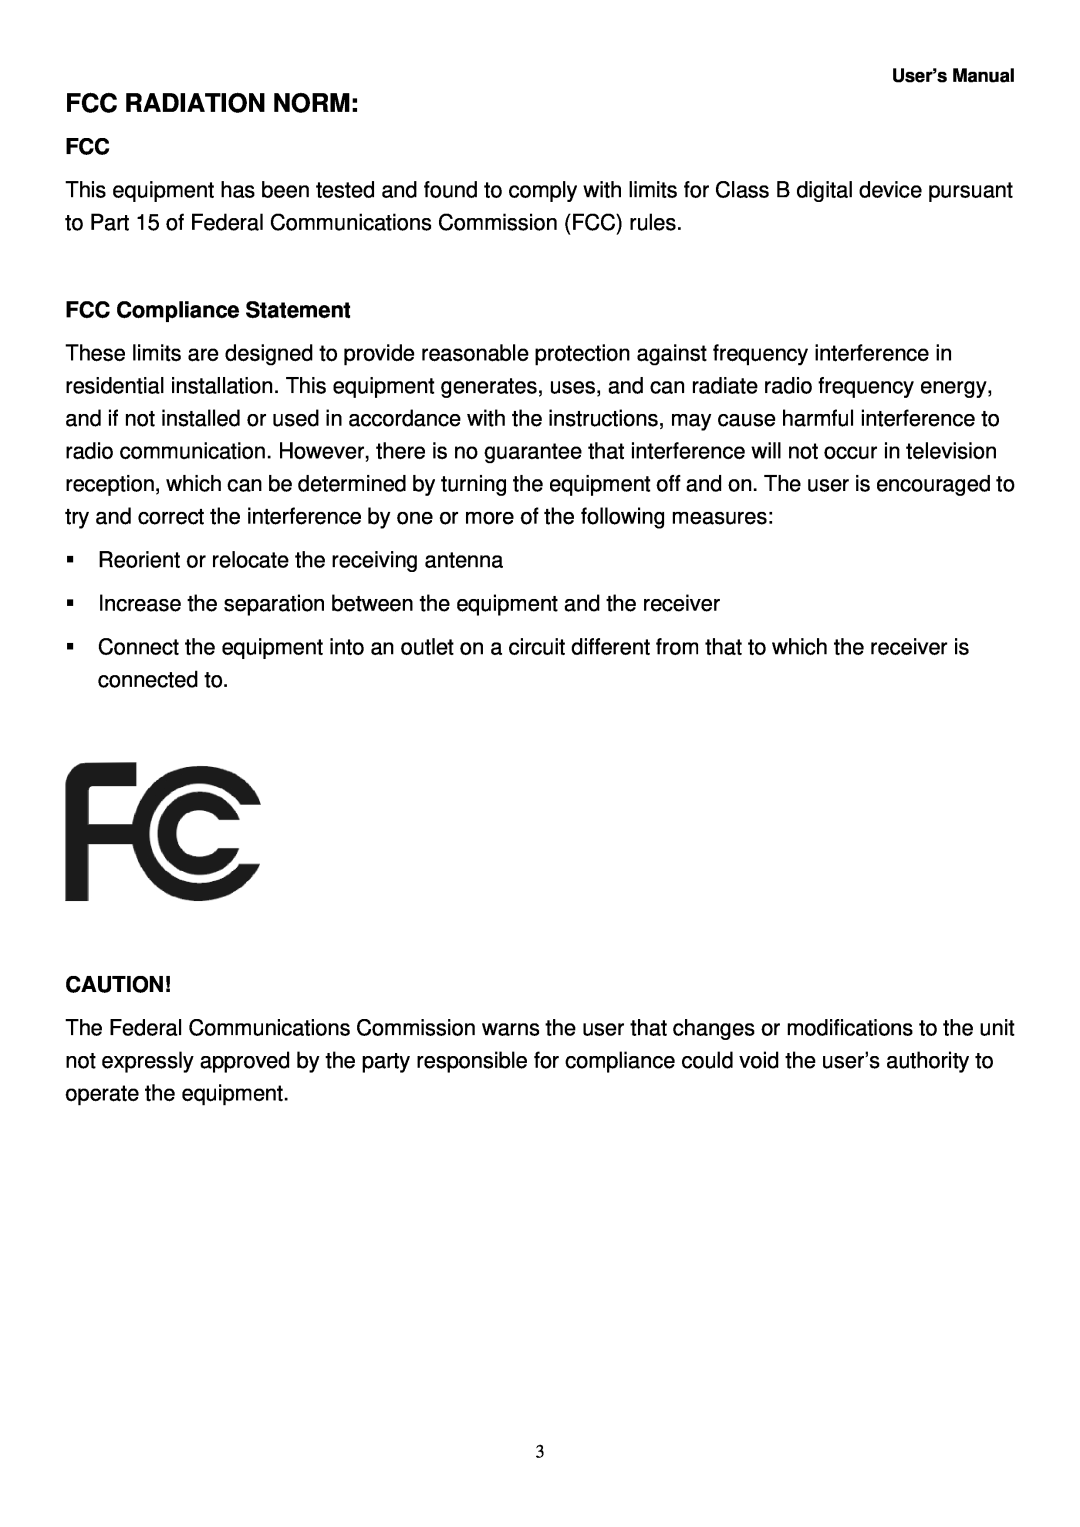 Night Owl Optics NO-8LCD manual Fcc Radiation Norm, FCC Compliance Statement 